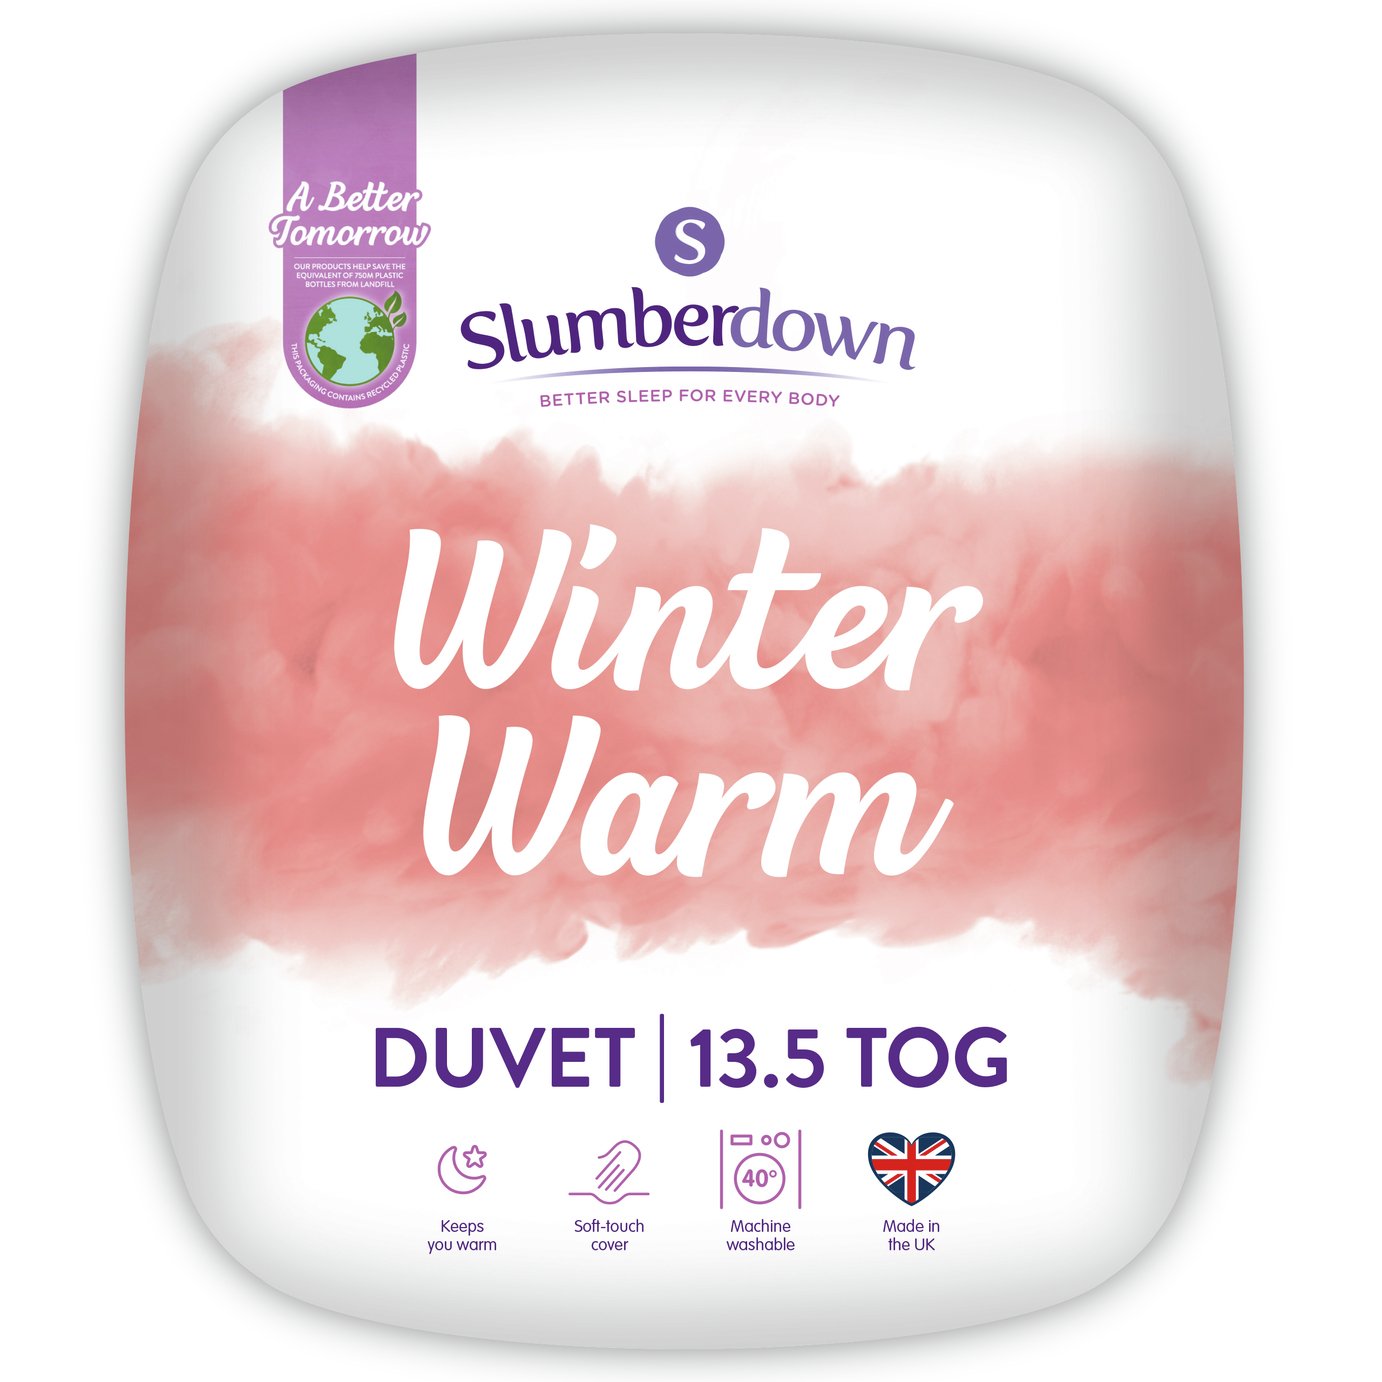 13.5 Tog Winter Warm King Size Slumberdown Warm Winter Nights Duvet